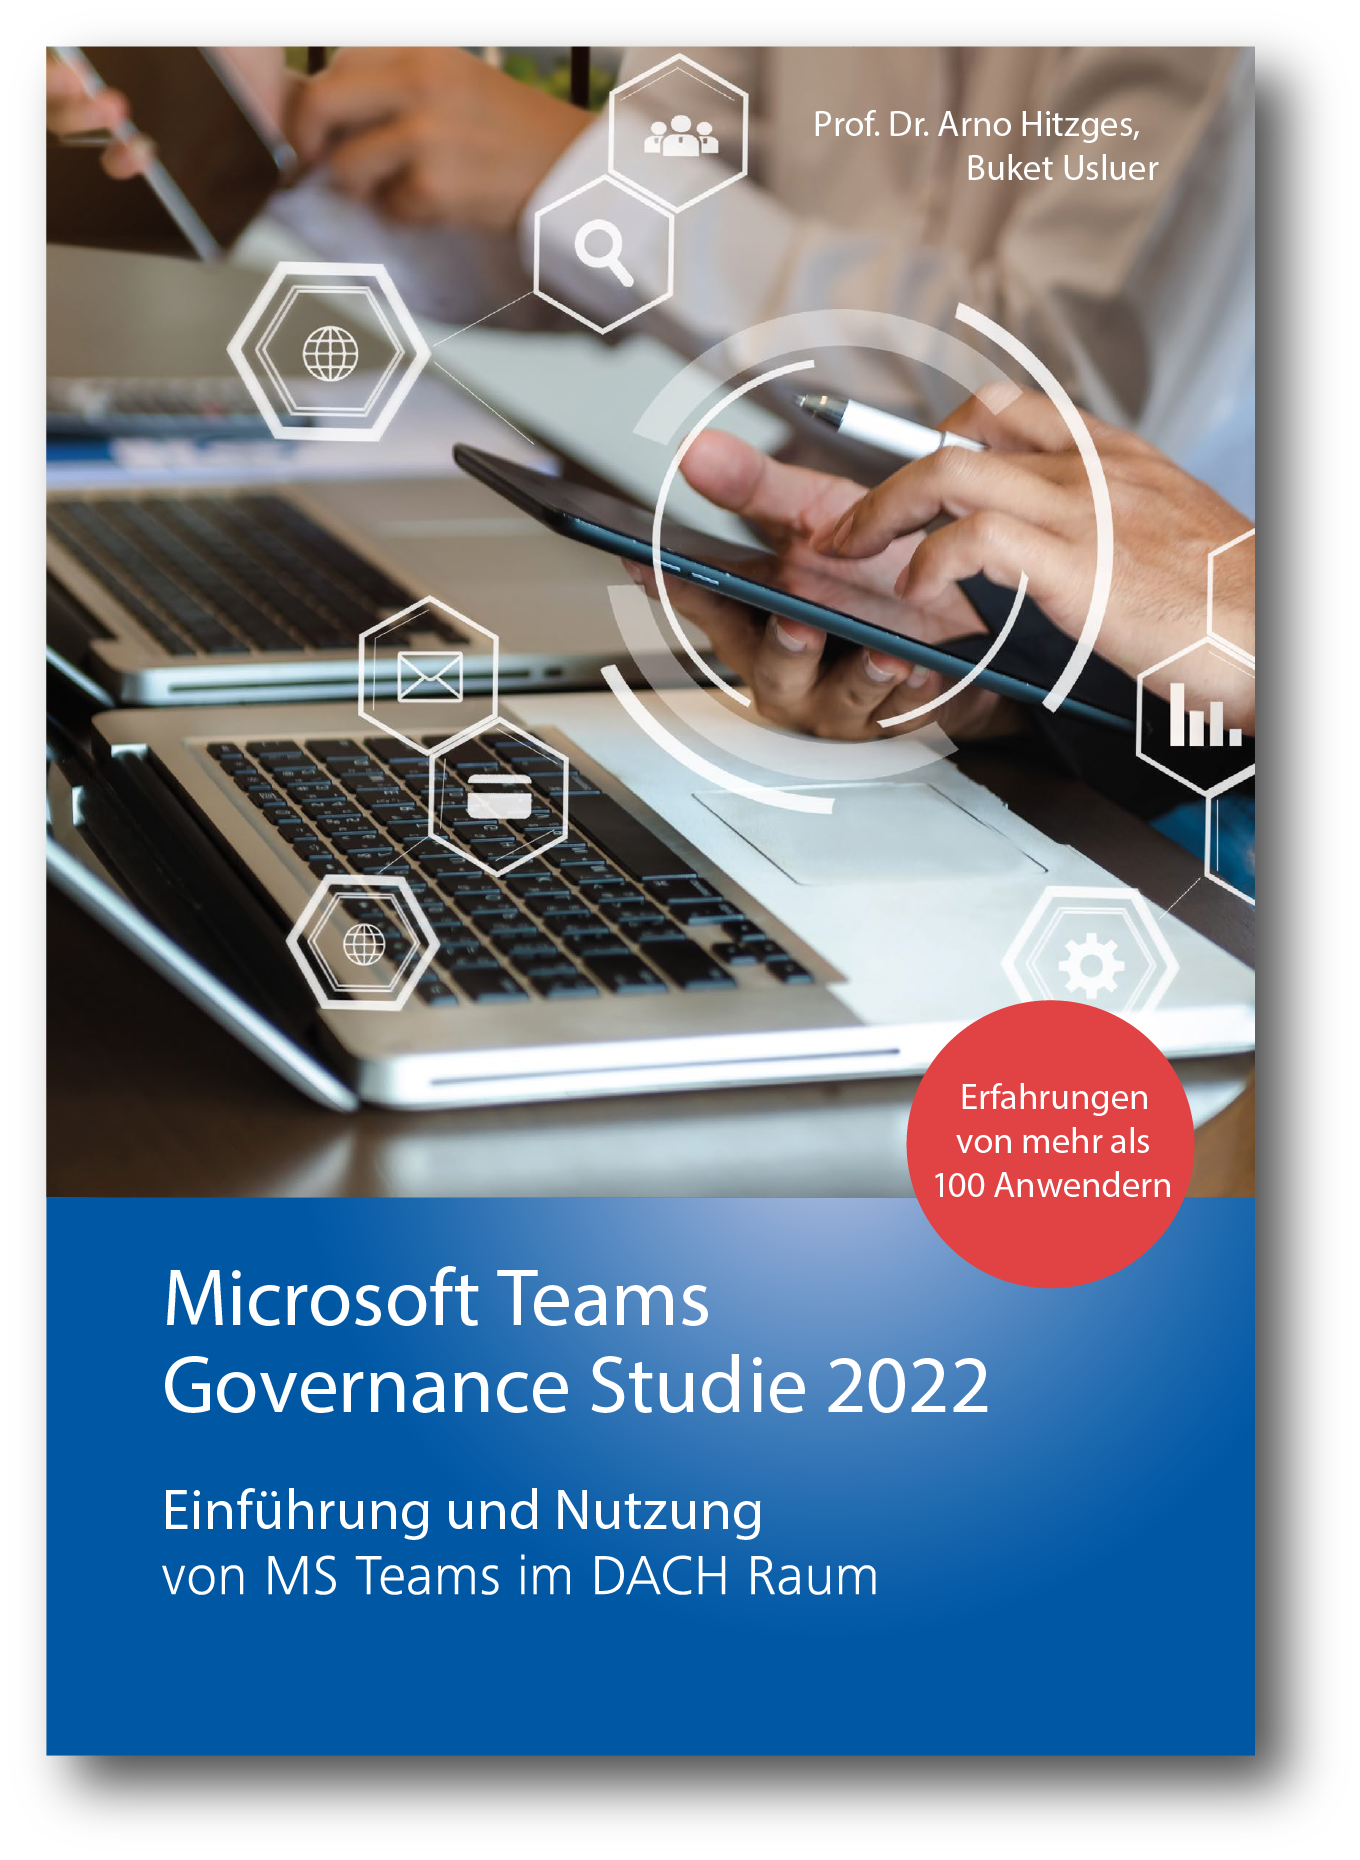 Microsoft Teams Governance Studie 2022